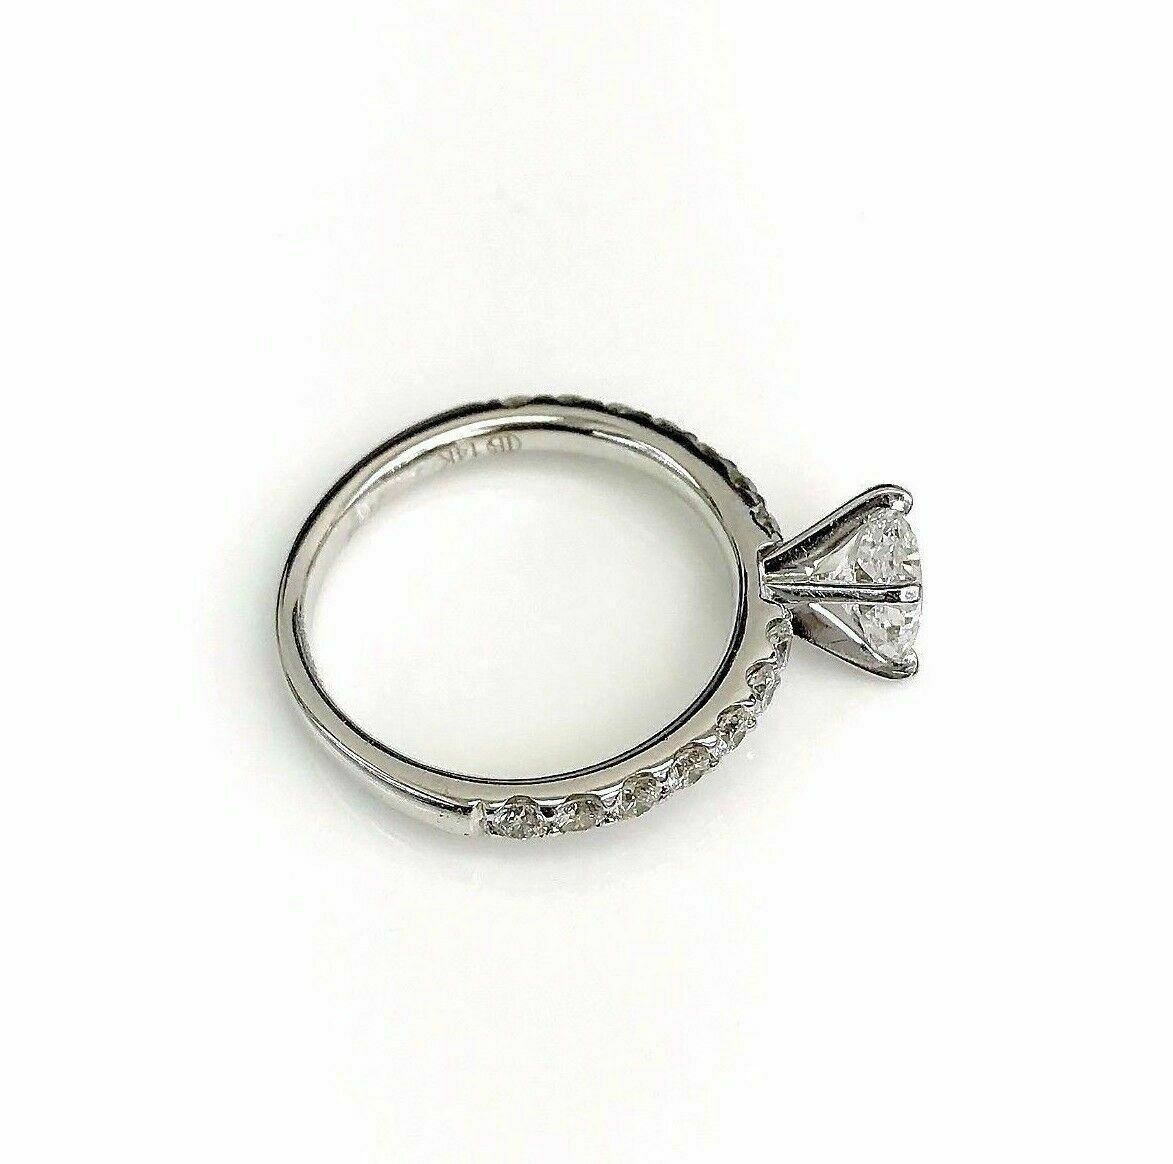 1.29 Carats GIA Diamond Engagement Ring 0.75 D SI1 GIA Cushion Center Stone 14K